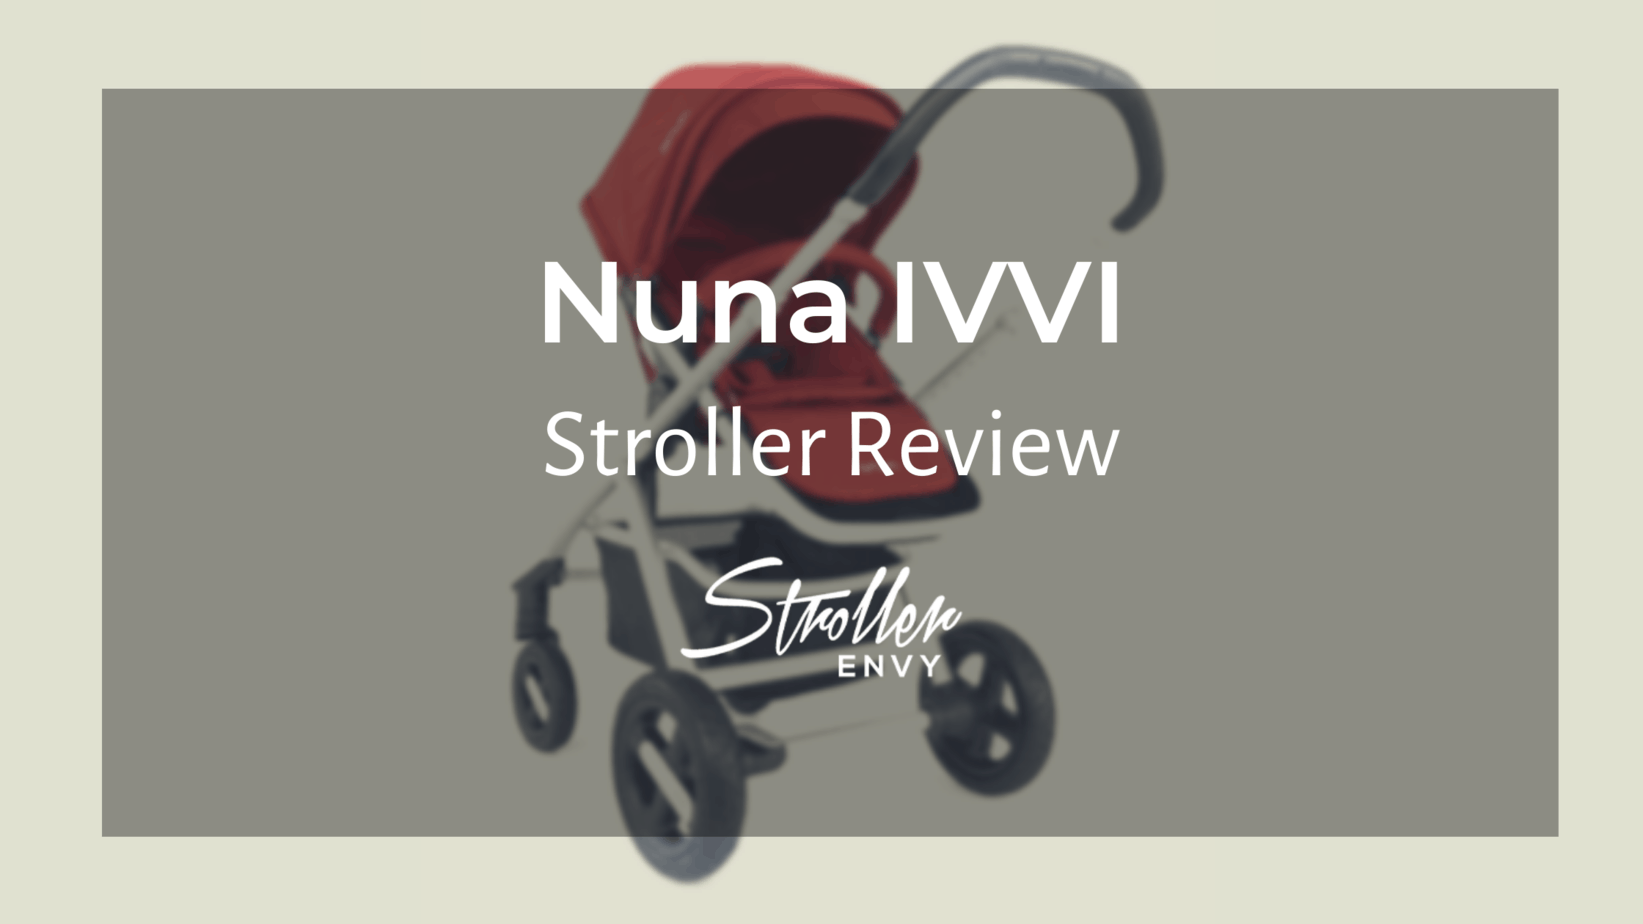 Nuna IVVI Stroller Review